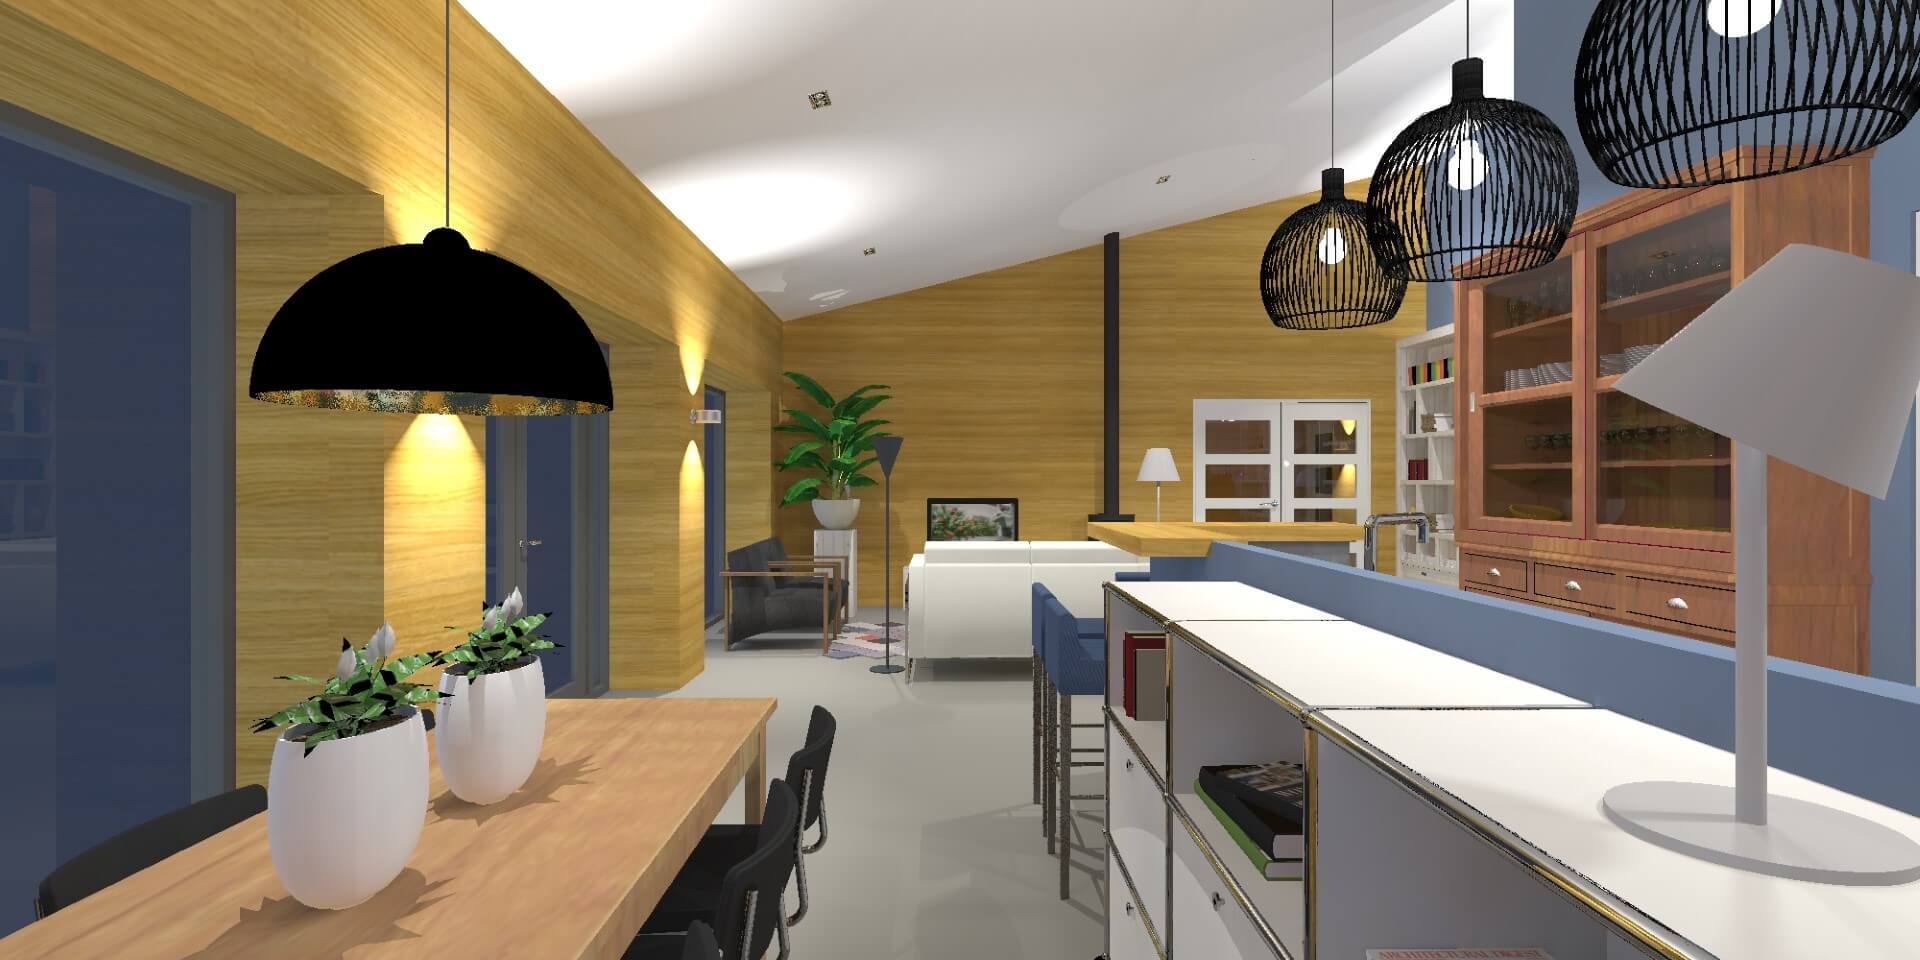 3D interieurontwerp, keukenontwerp, kleuradvies en lichtplan Almere - Oosterwold - Flevoland | Huis & Interieur